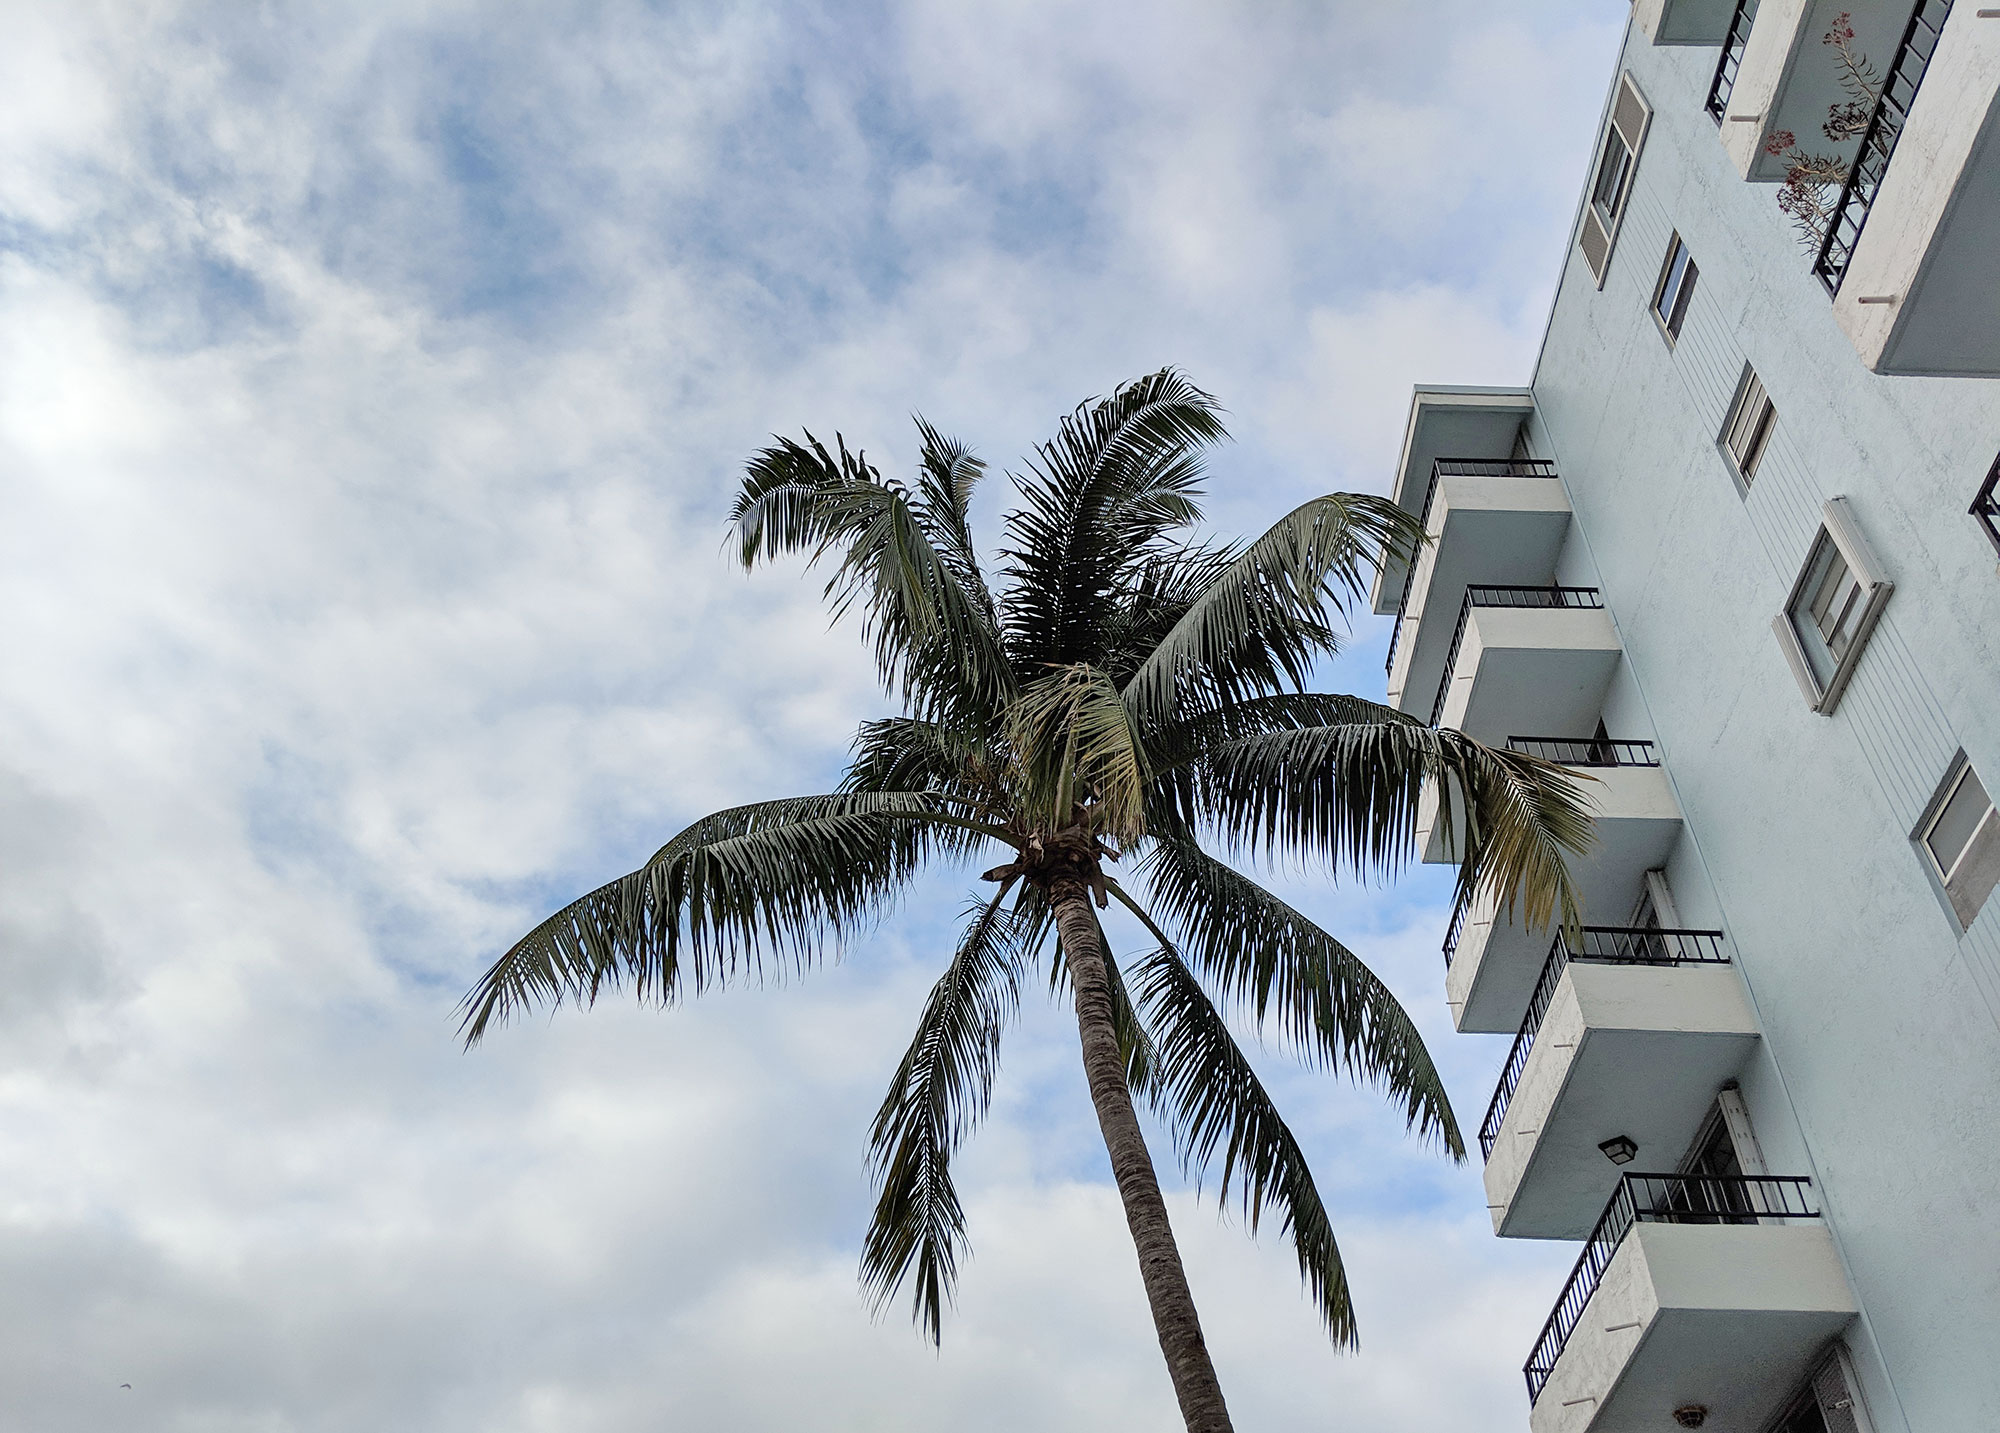 Condos and palms in Miami.